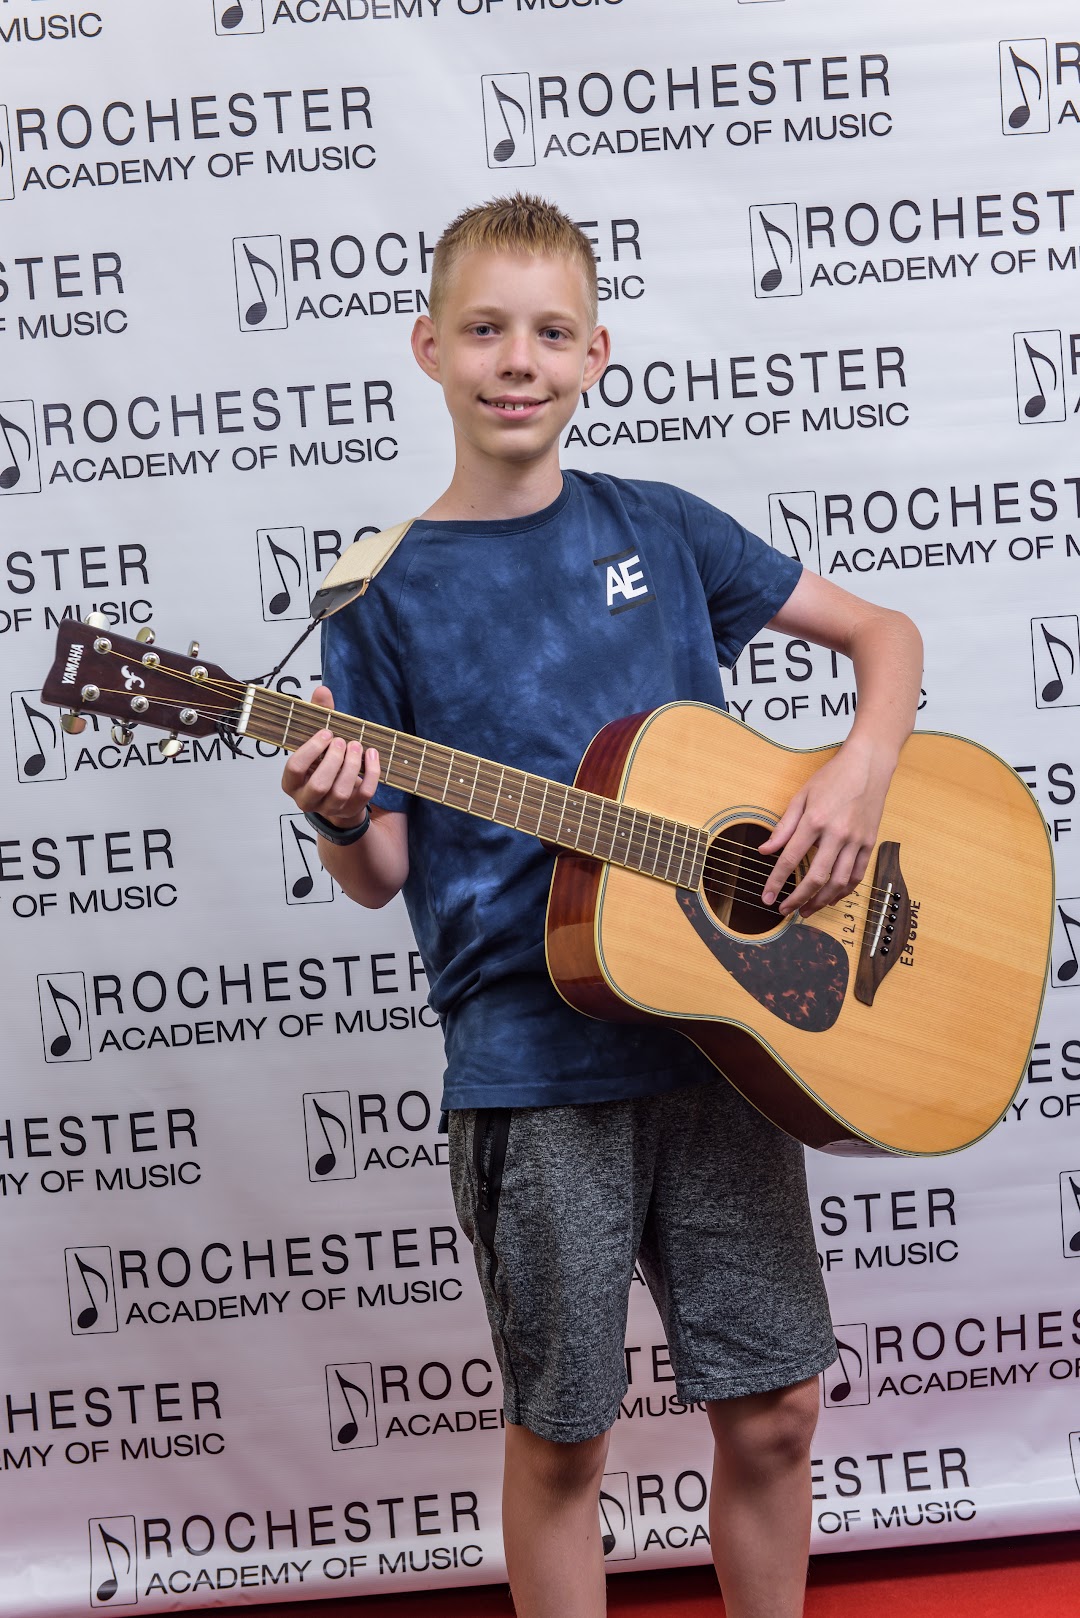 Rochester Academy of Music